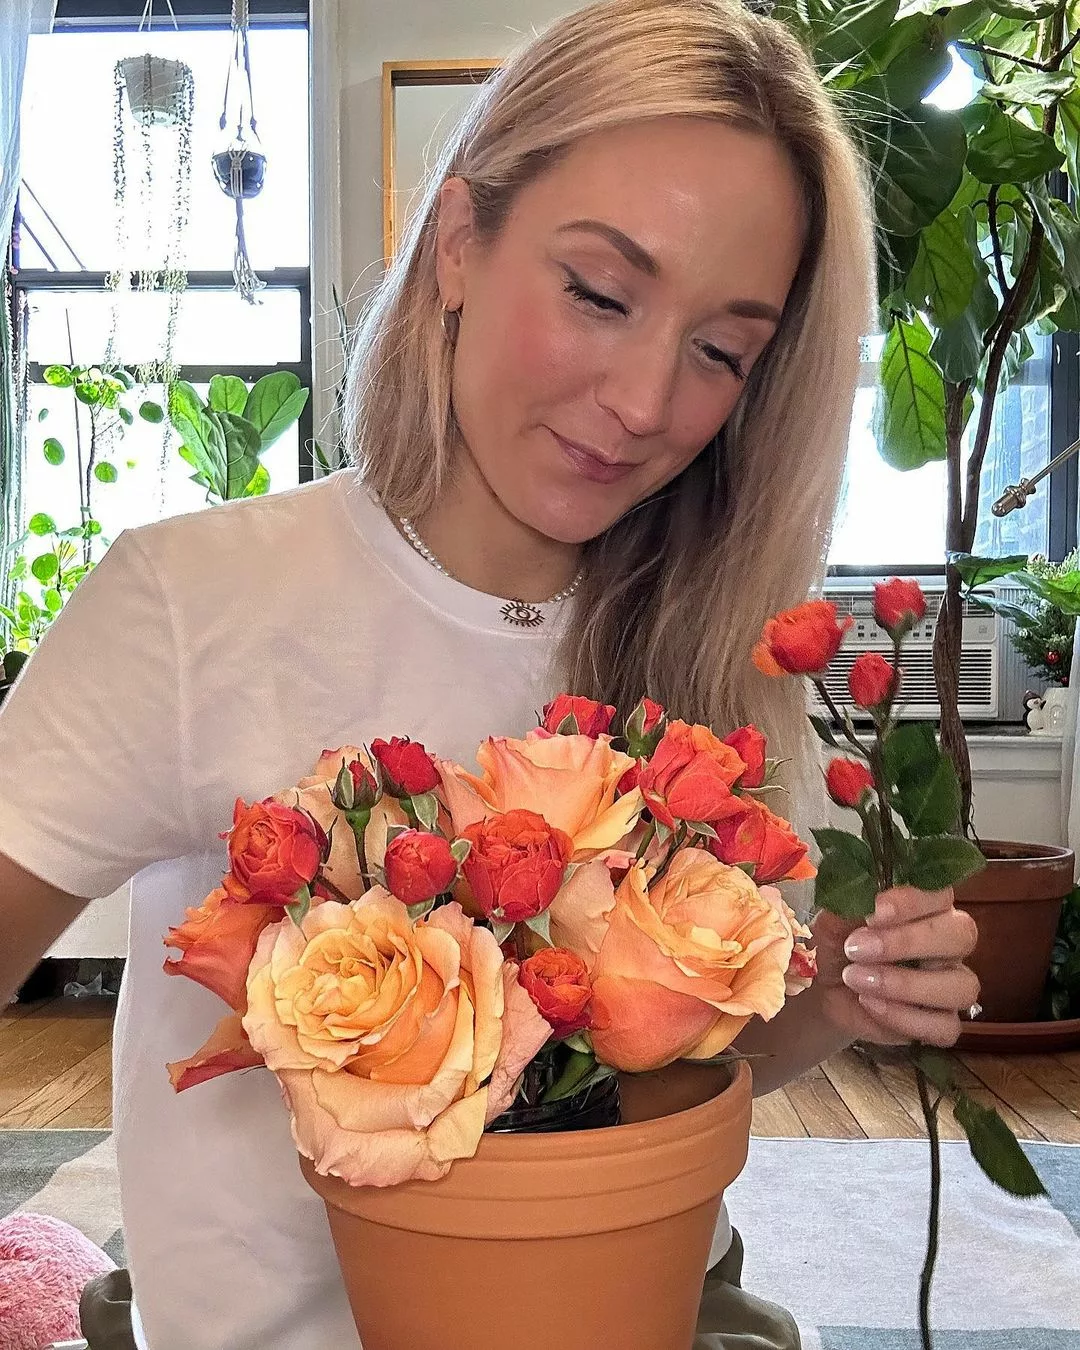 queer plant expert Ciara Benko arranging flowers